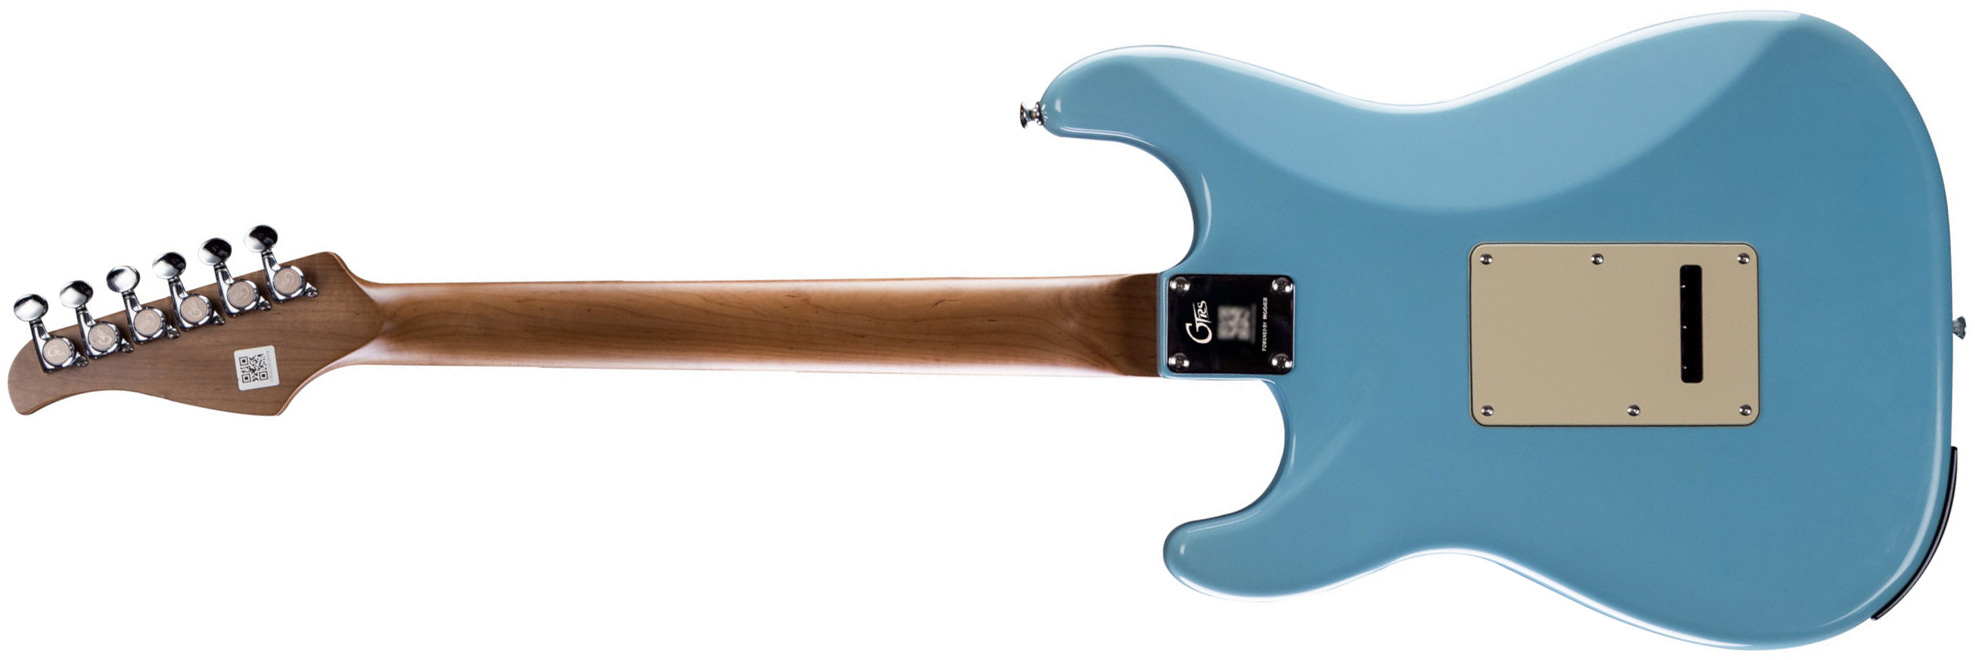 Mooer Gtrs P800 Pro Intelligent Guitar Hss Trem Rw - Tiffany Blue - Modeling guitar - Variation 1